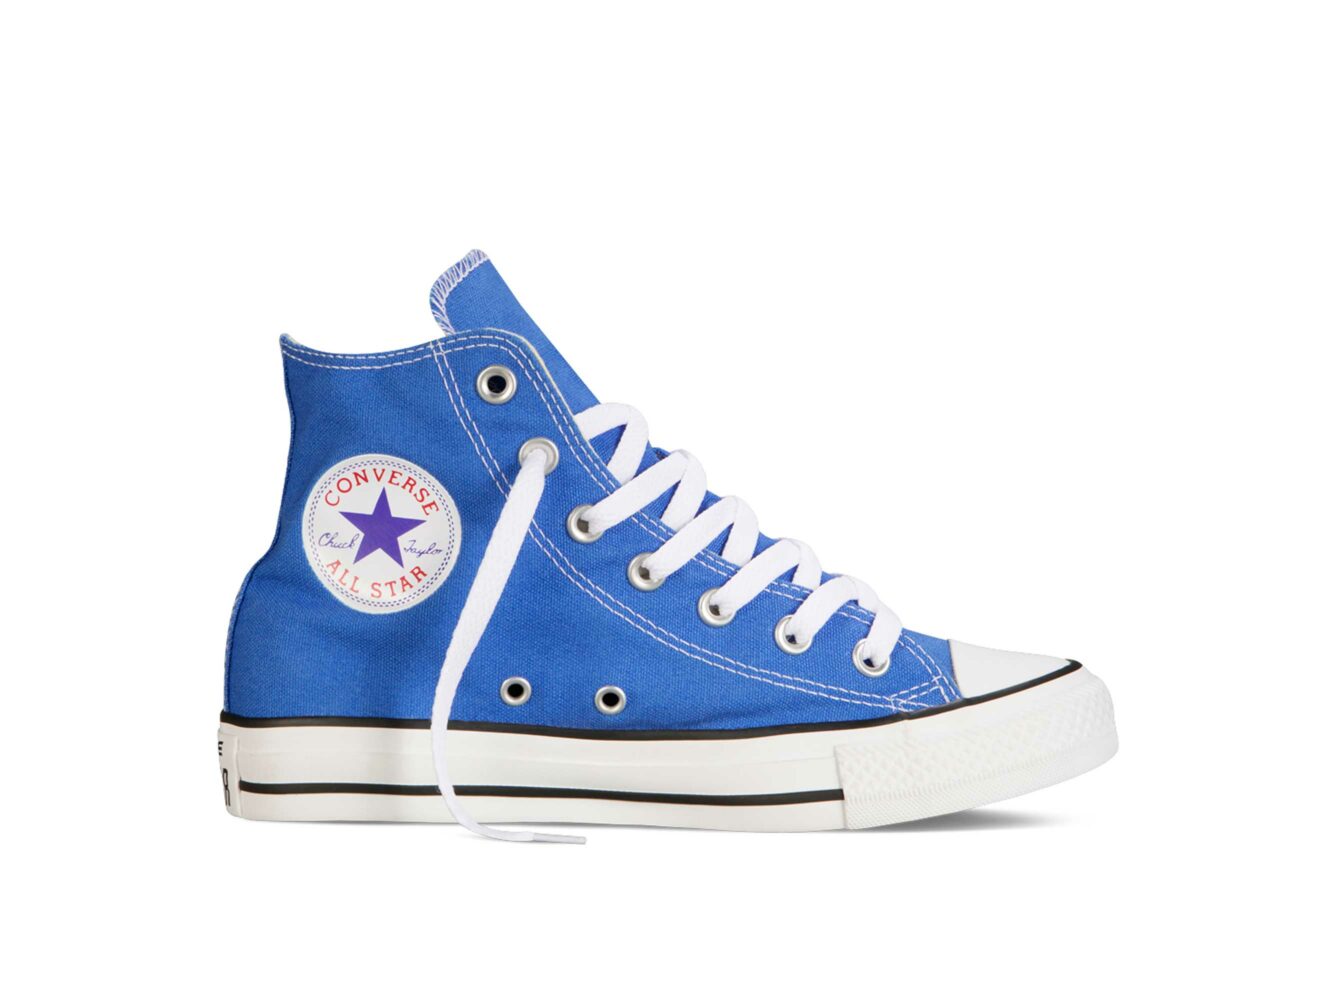 Converse Chuck Taylor All Star Hight Bright Blue